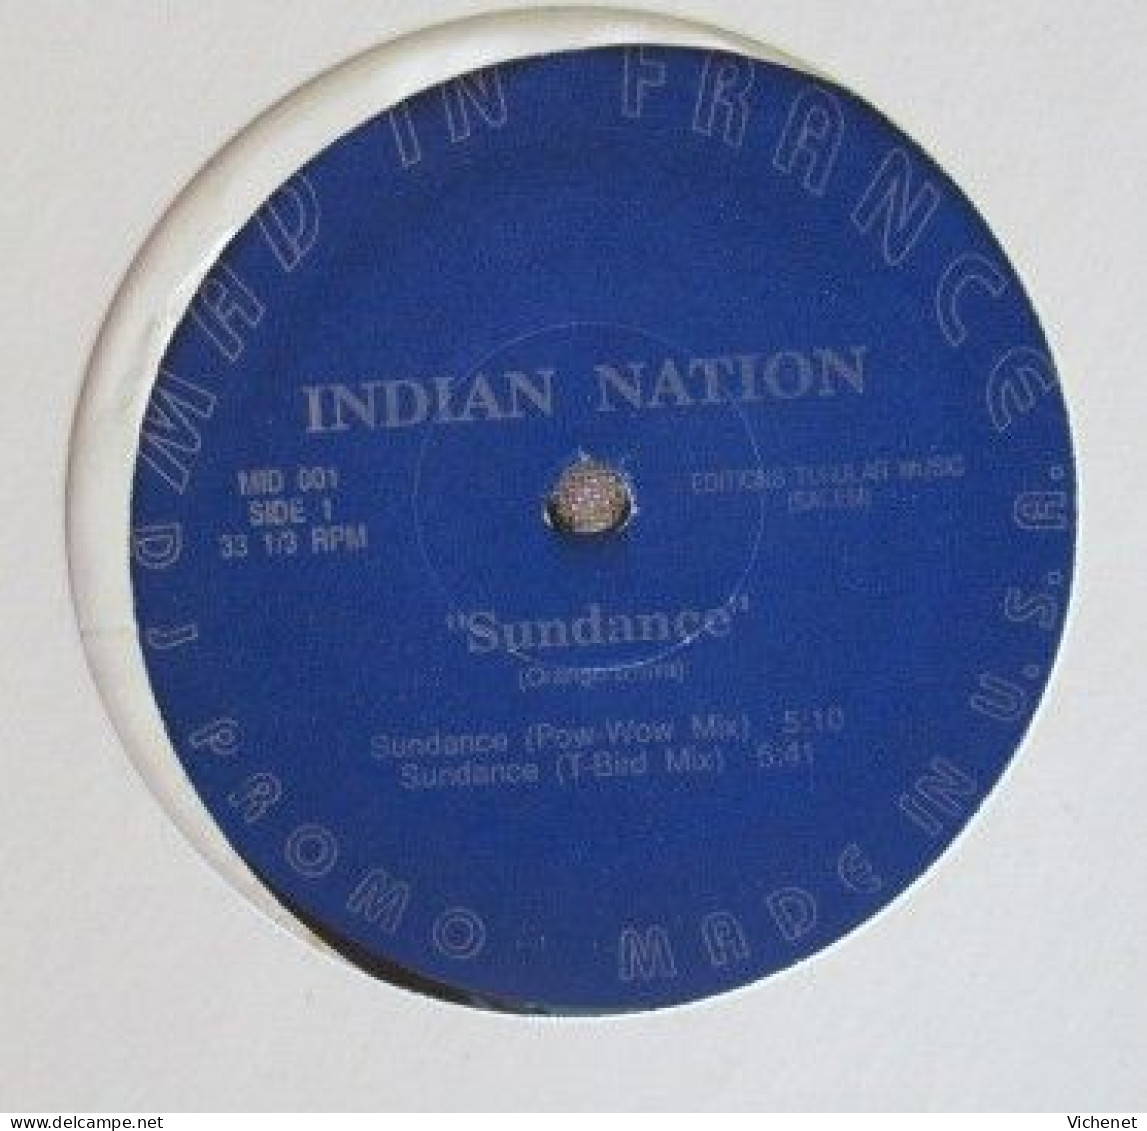 Indian Nation – Sundance - Maxi - 45 T - Maxi-Single